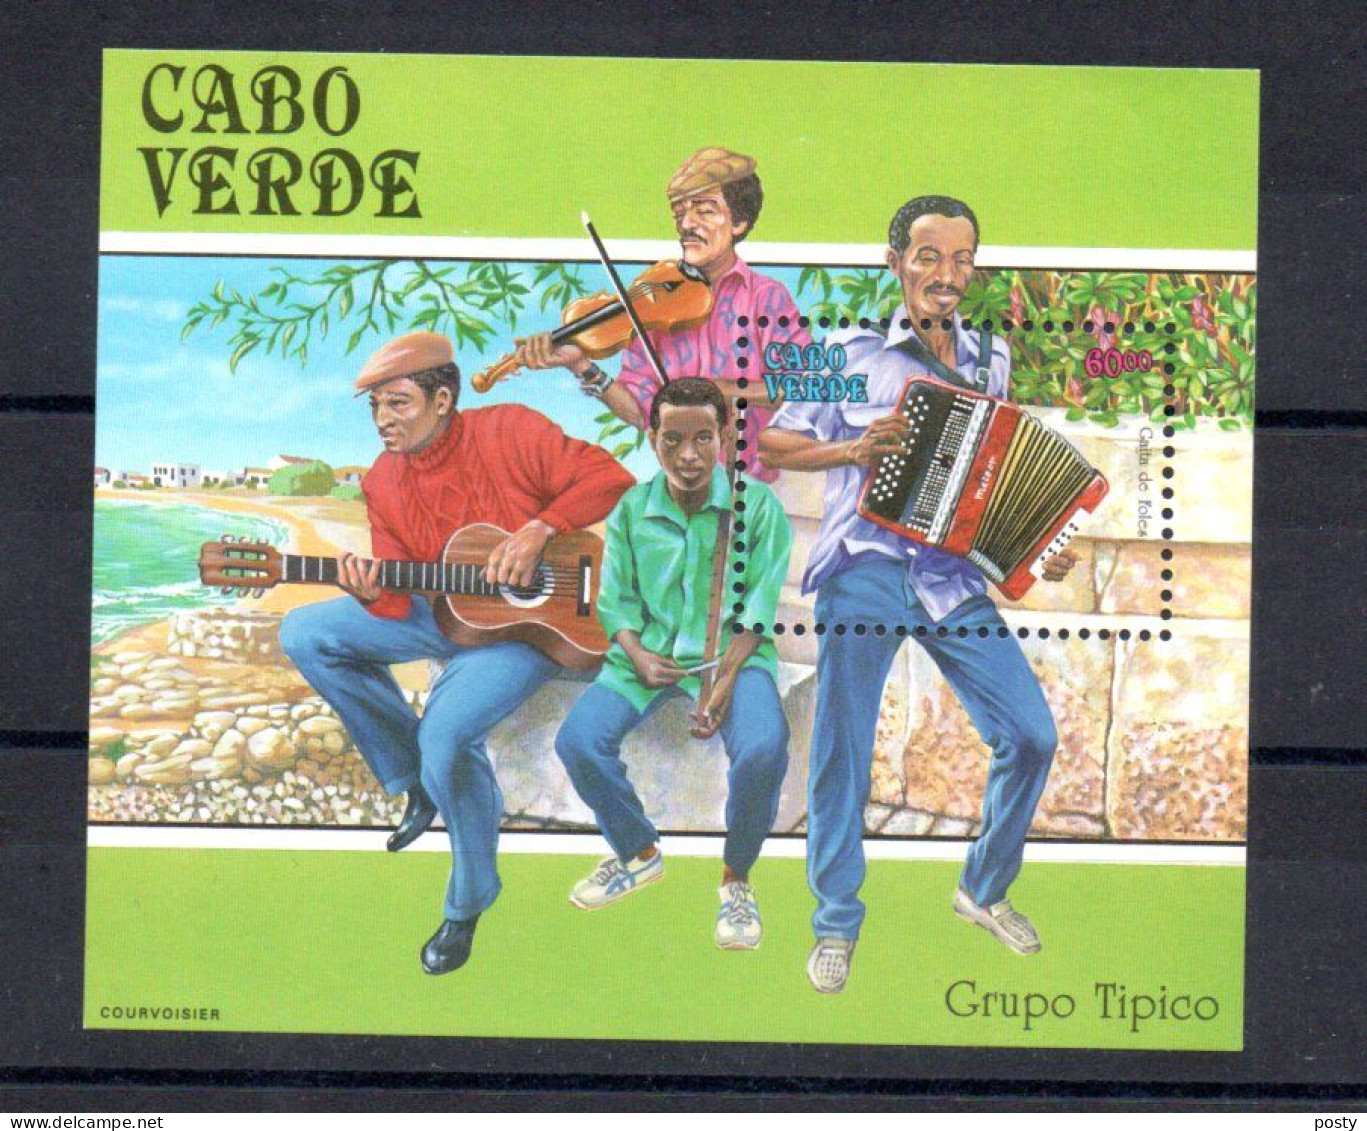 CAP VERT - CABO VERDE - CAPE VERDE - M/S - B/F - 1991 - GROUPE TYPIQUE - TRADITIONAL GROUP - MUSIQUE - MUSIC - - Cap Vert